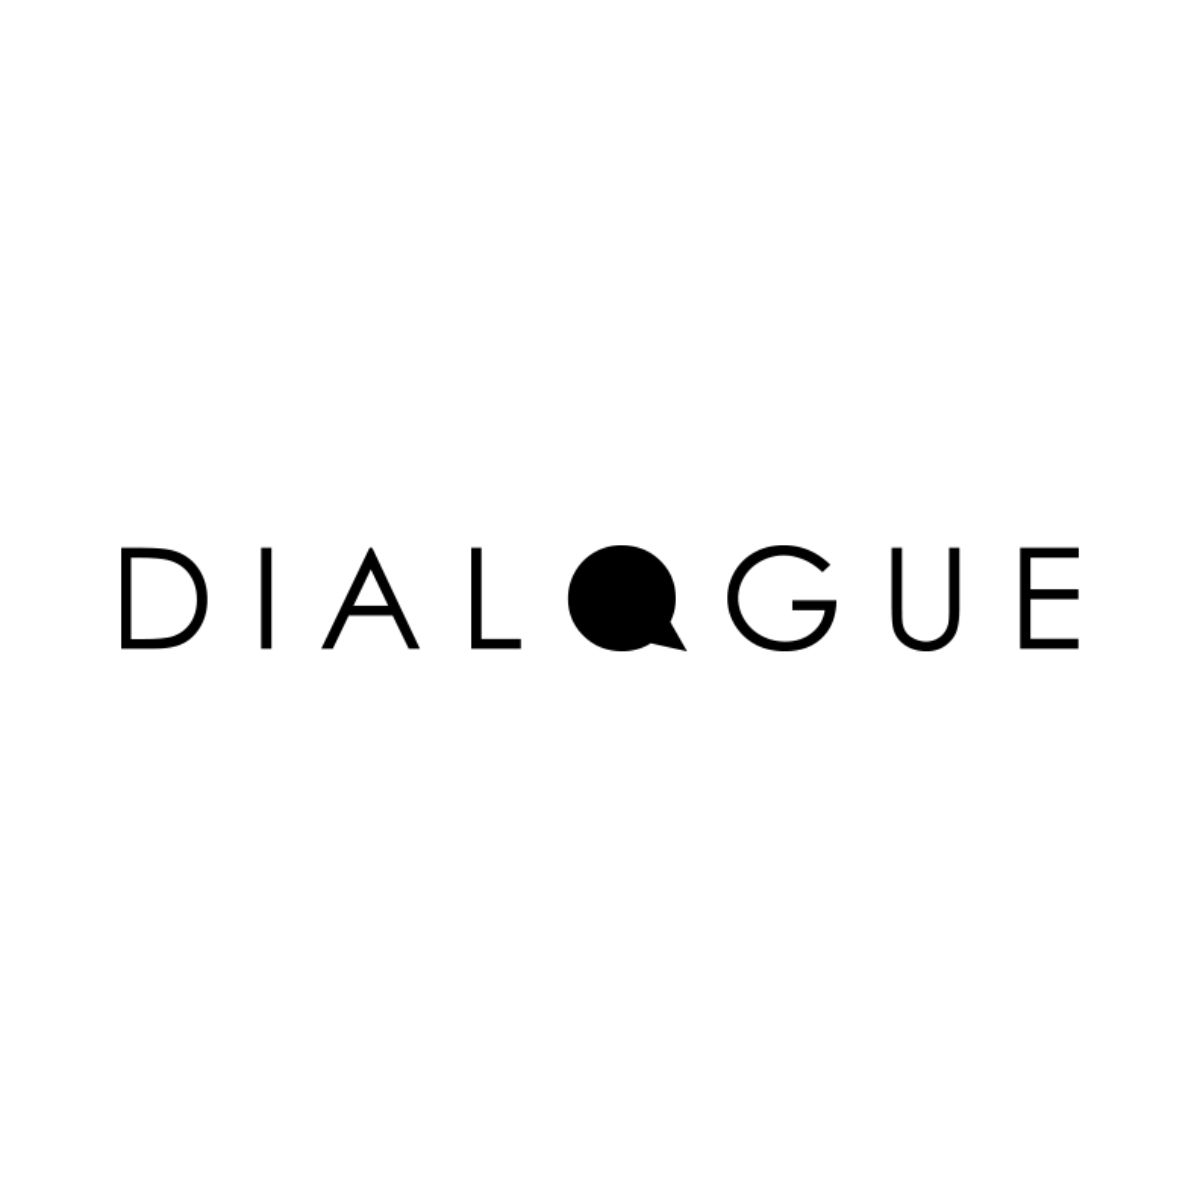 <Dialogue communications>